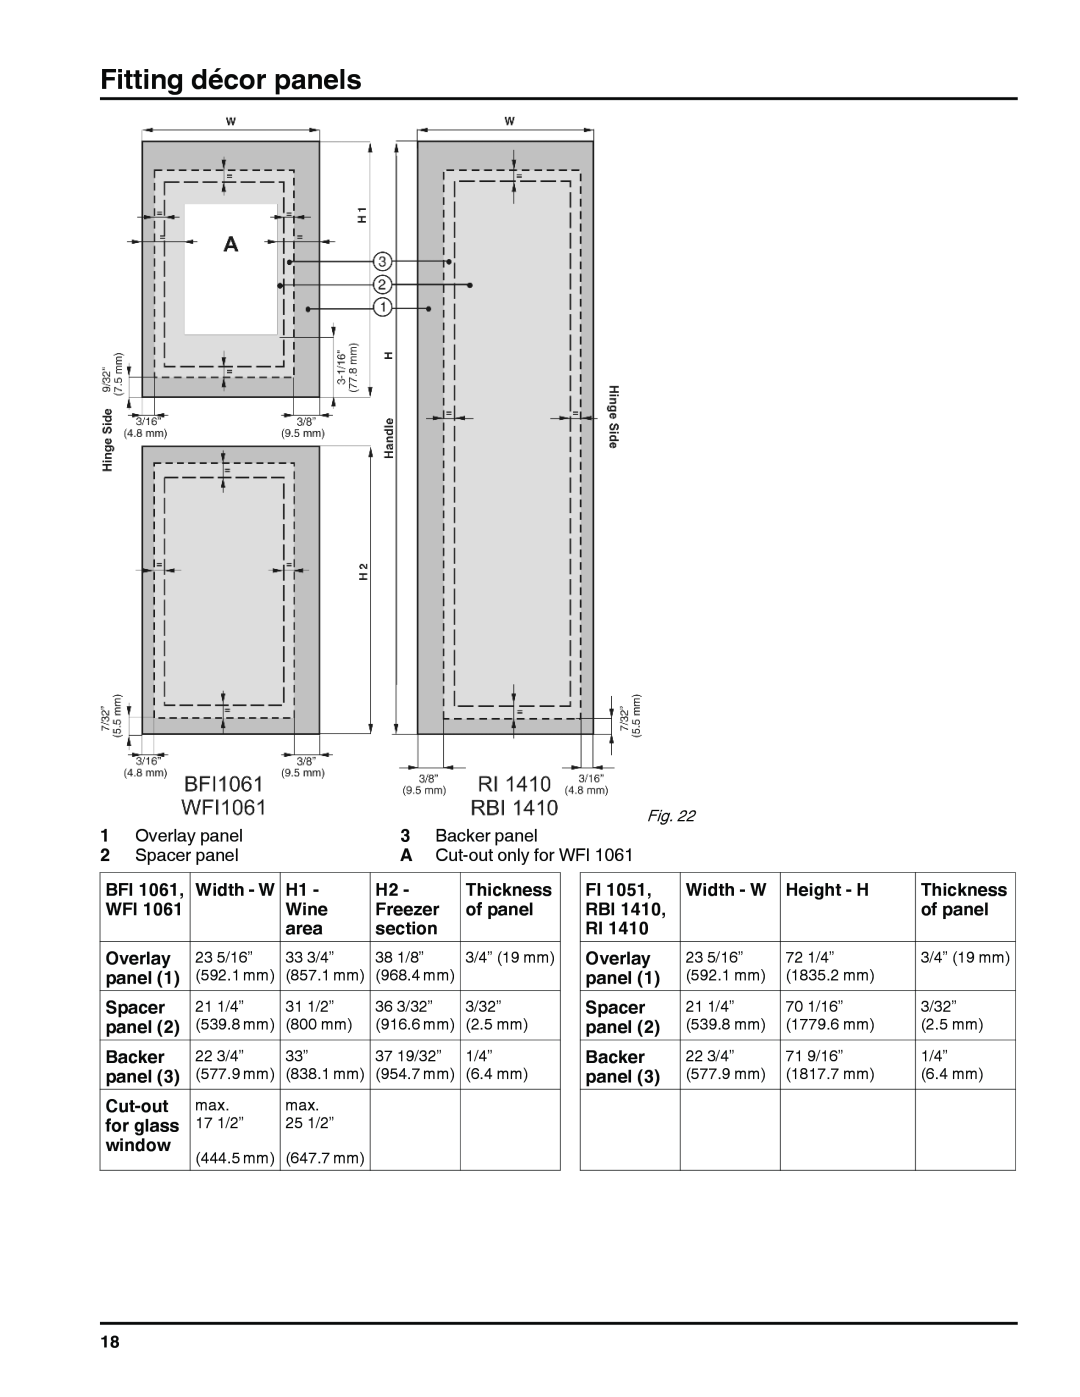 Liebherr RI 1410/ RBI 1410/ FI 1051 manual Fitting décor panels, Overlay panel, Backer panel, Spacer panel 